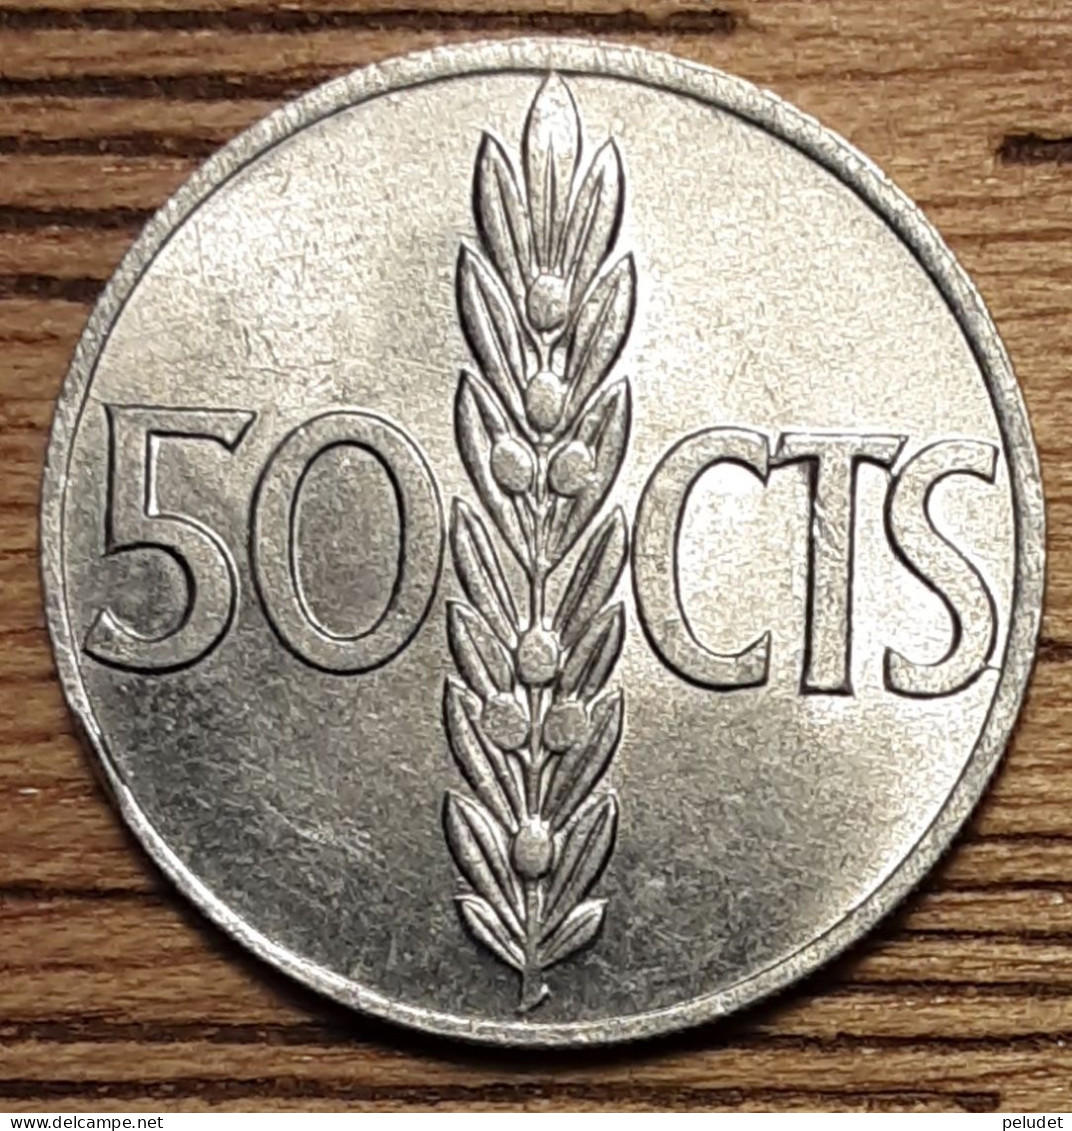 España Spain Espagne, 50 CTS CENTIMOS 1966 / 68* KM# 795 - 50 Centimos